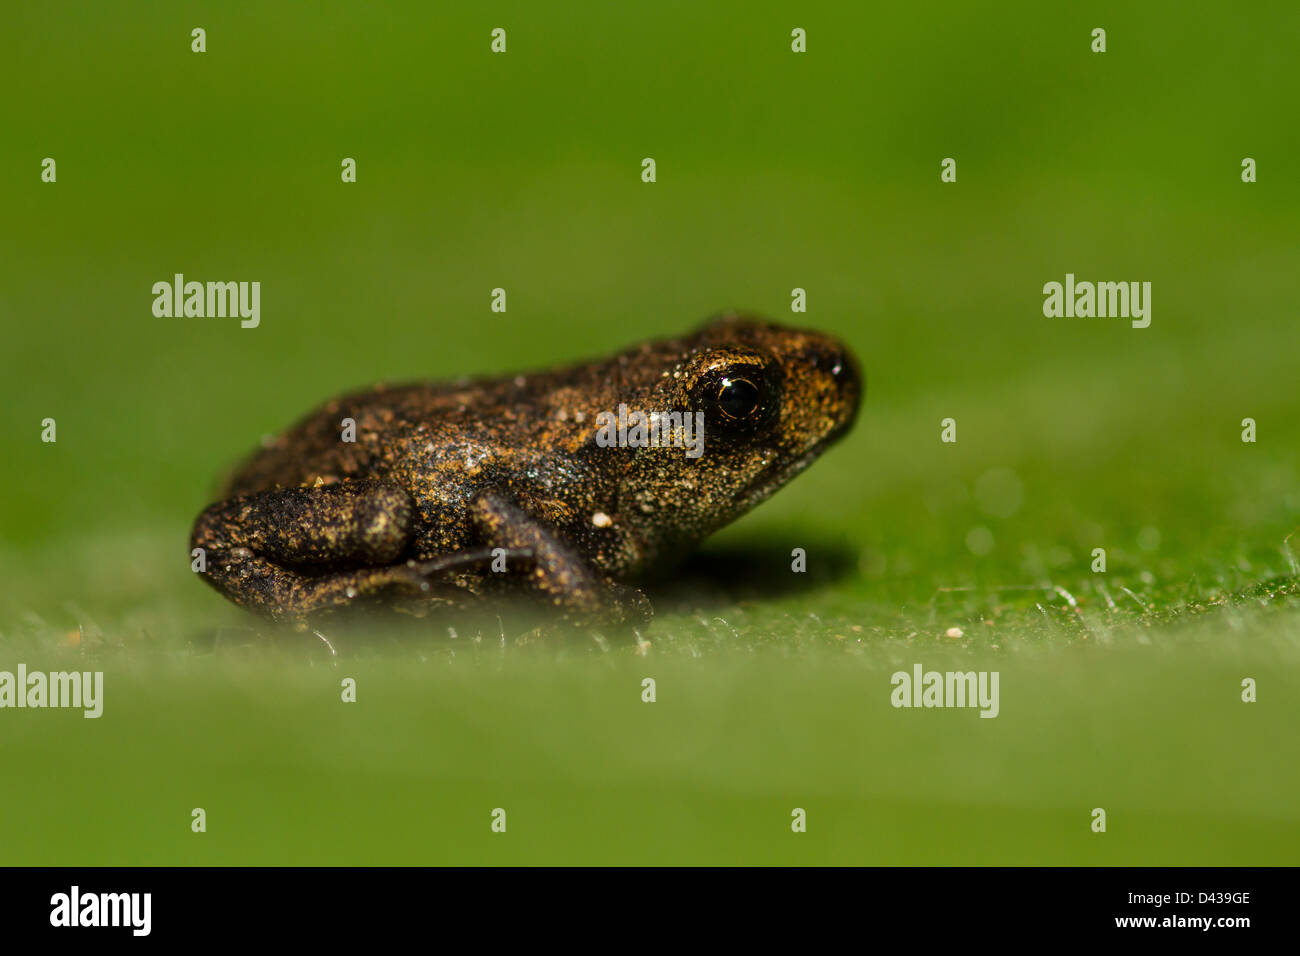 An Iberian breeding frog on a leaf Stock Photo